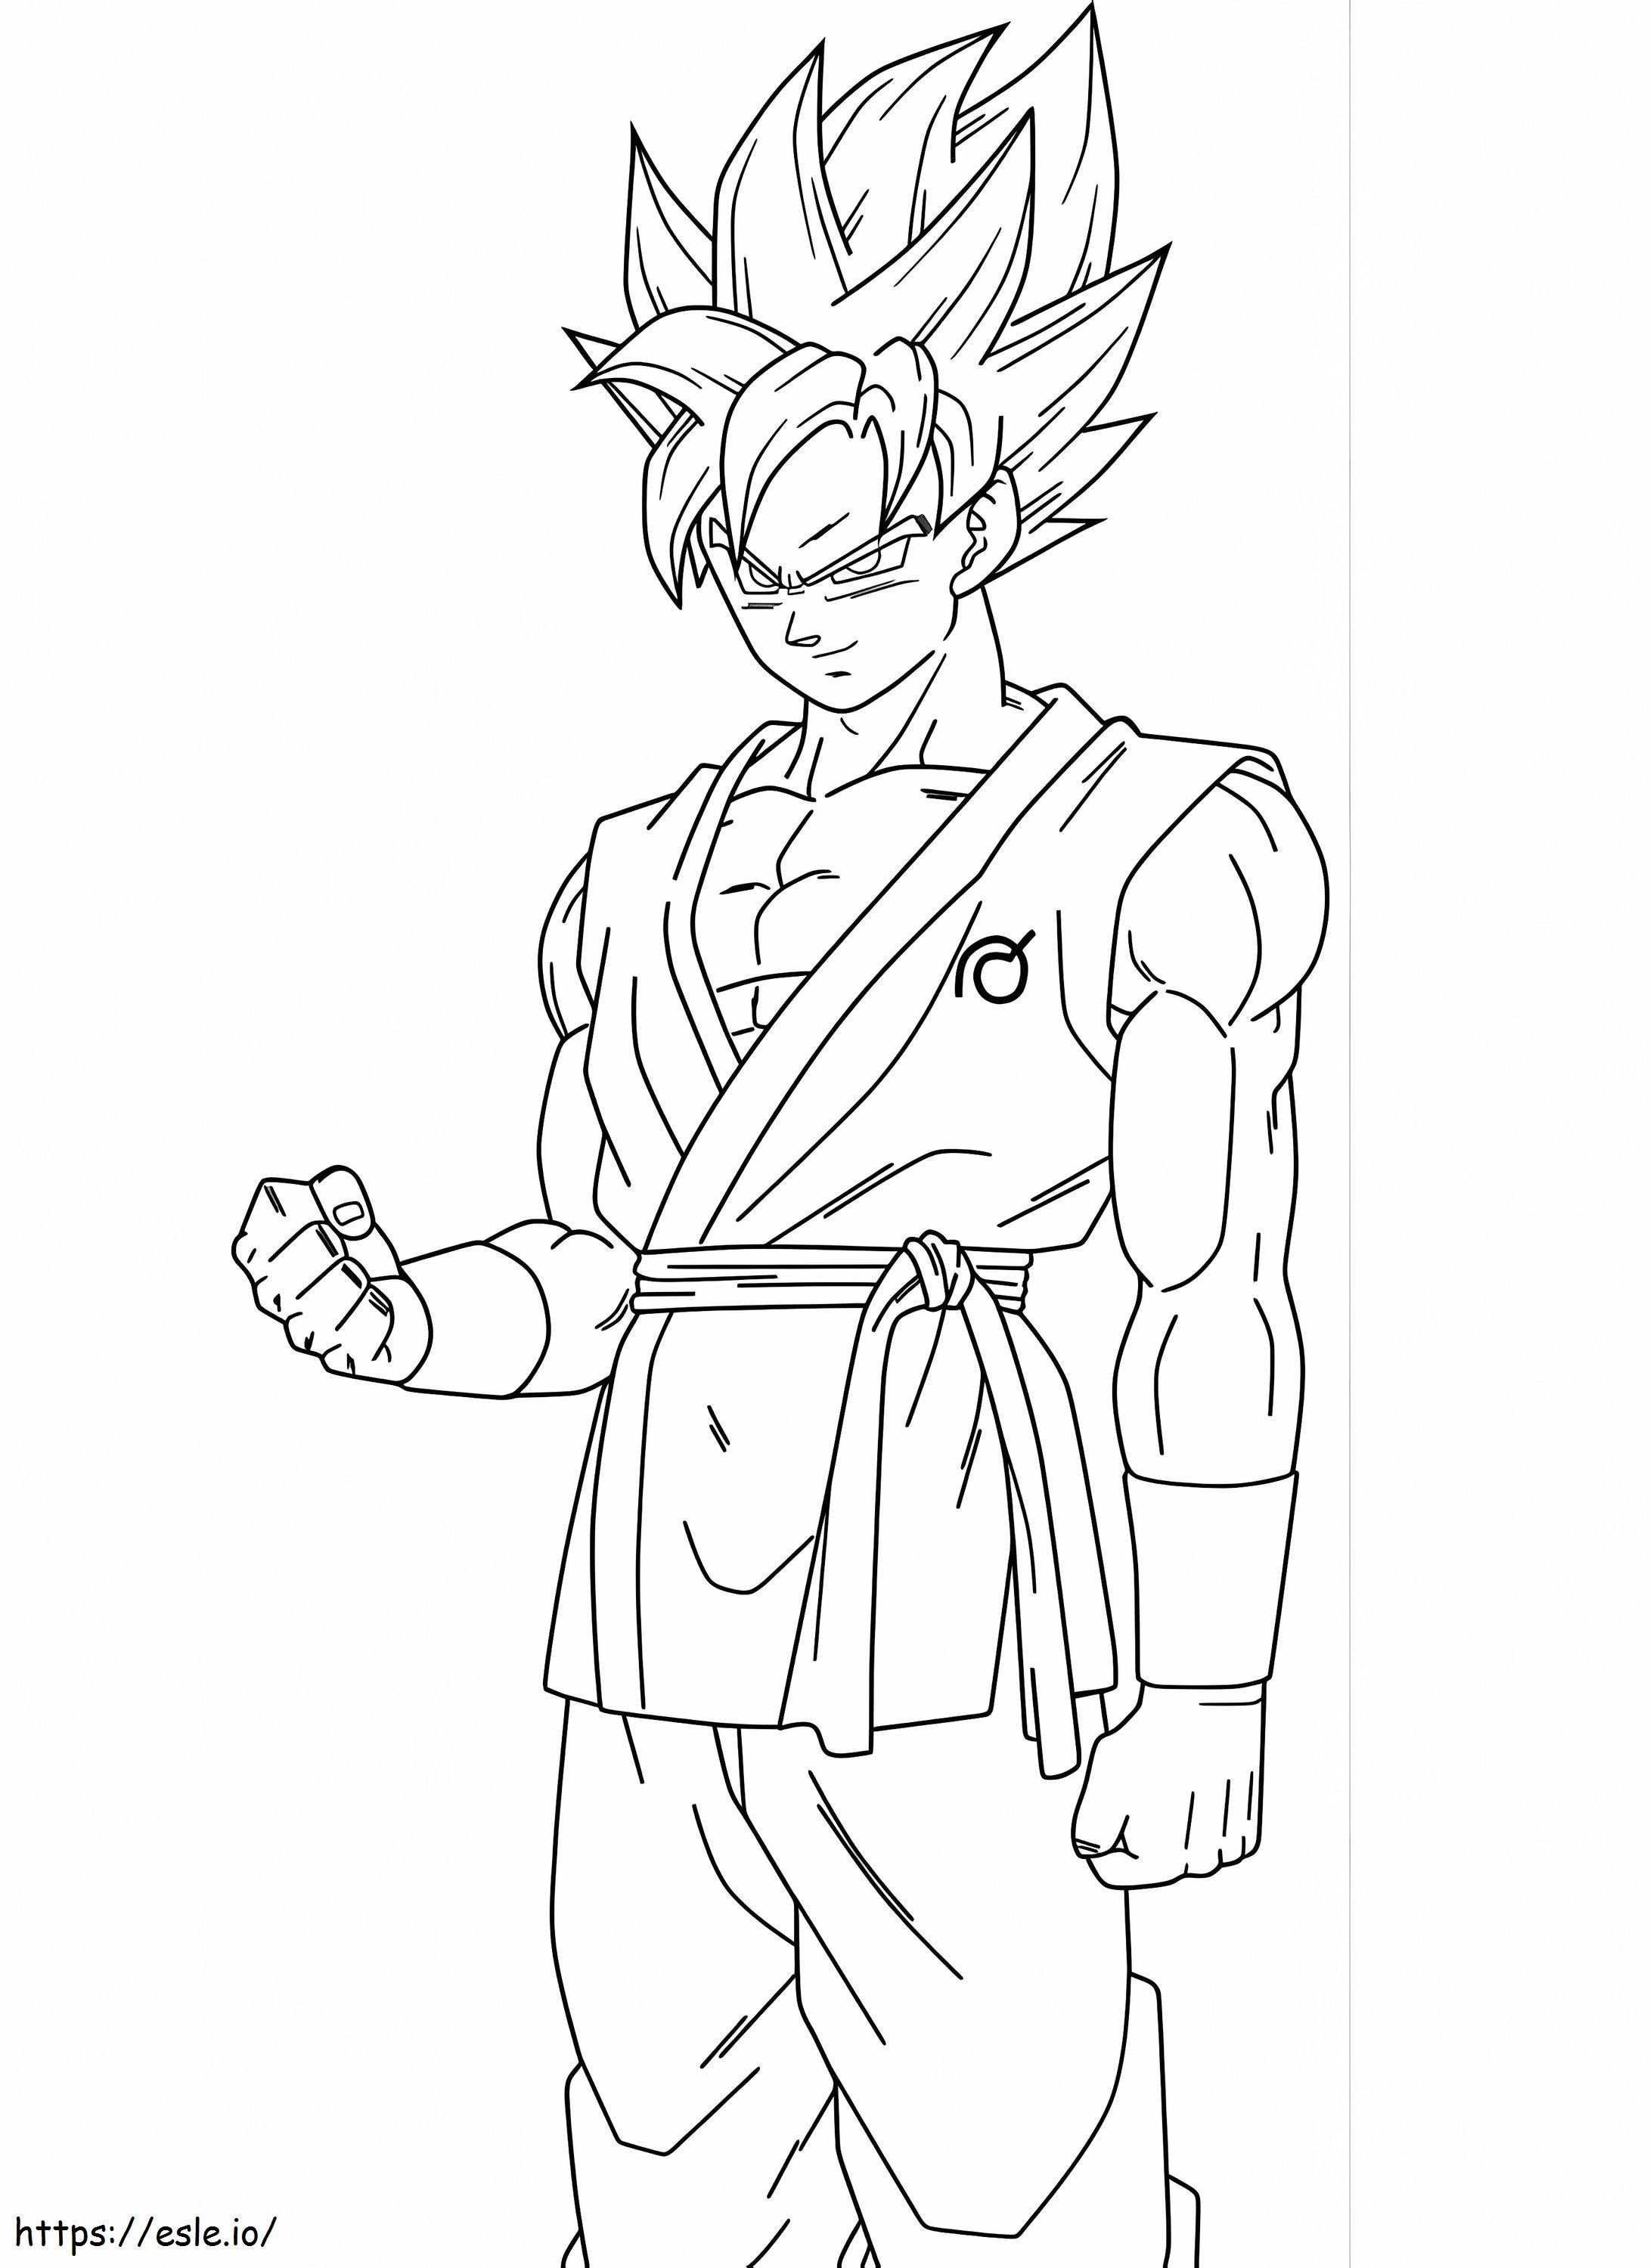 Cooler Son-Goku ausmalbilder